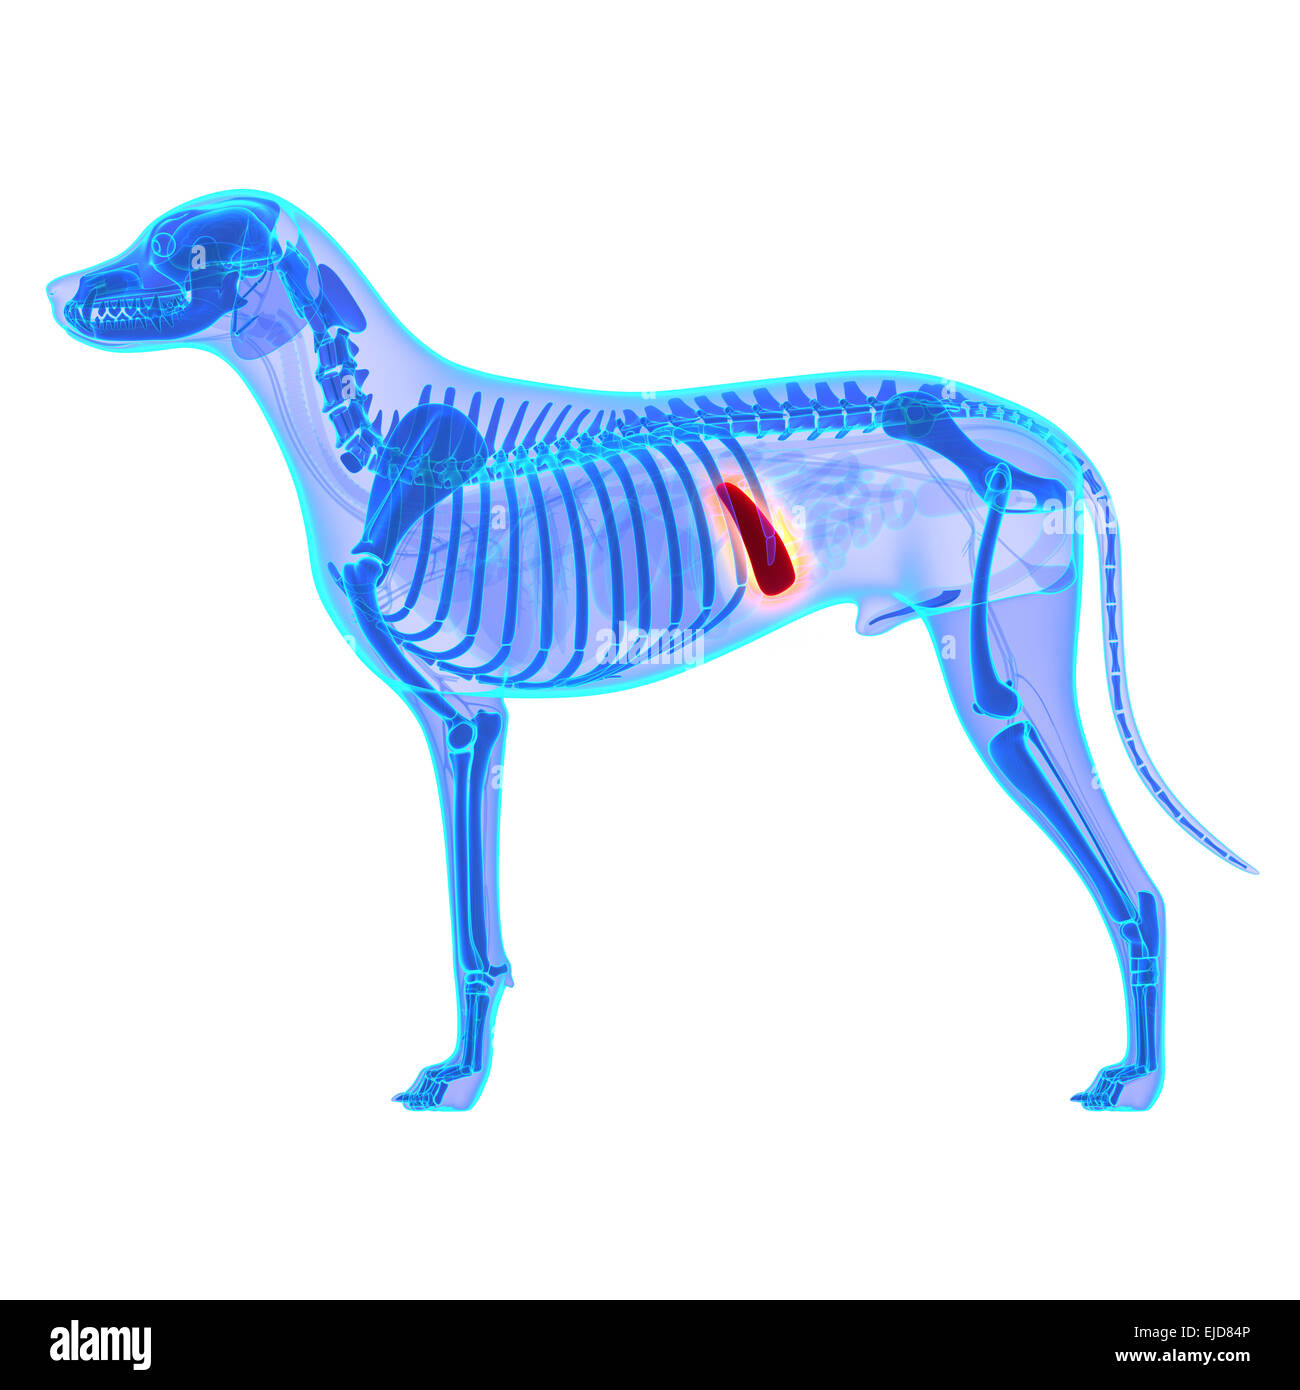 Cane milza - Canis lupus Familiaris anatomia - isolato su bianco Foto Stock